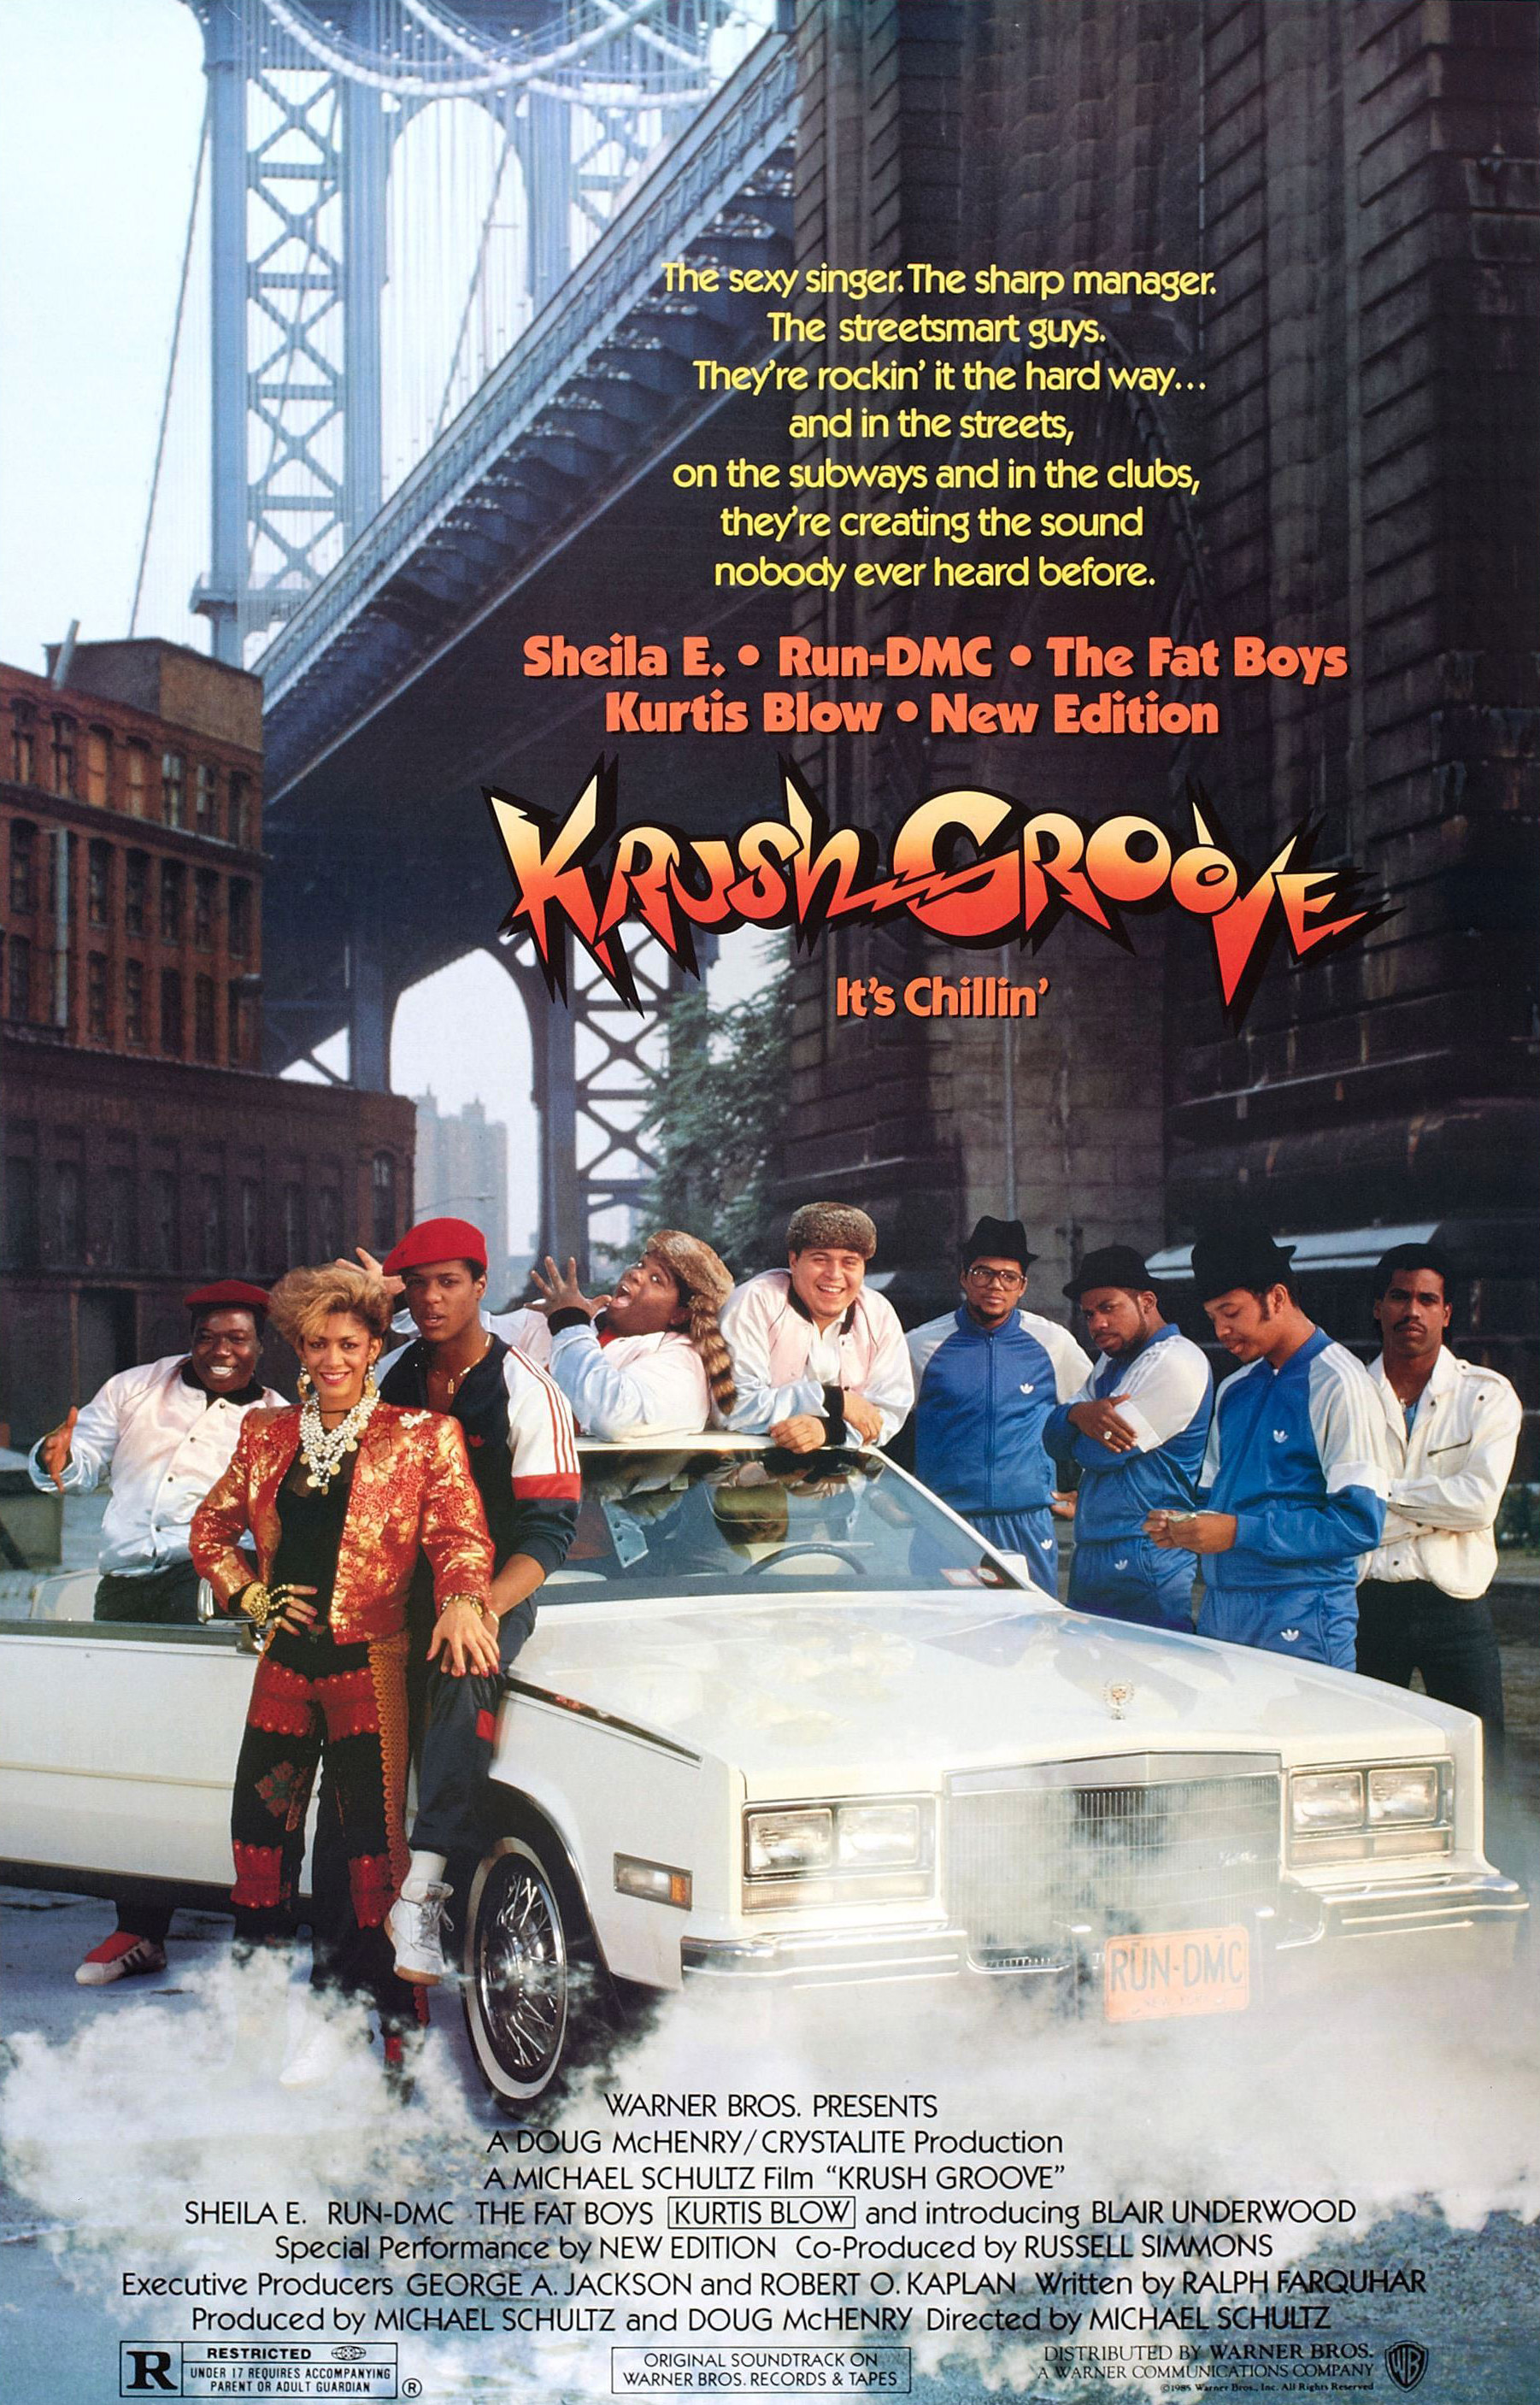 Nonton film Krush Groove layarkaca21 indoxx1 ganool online streaming terbaru